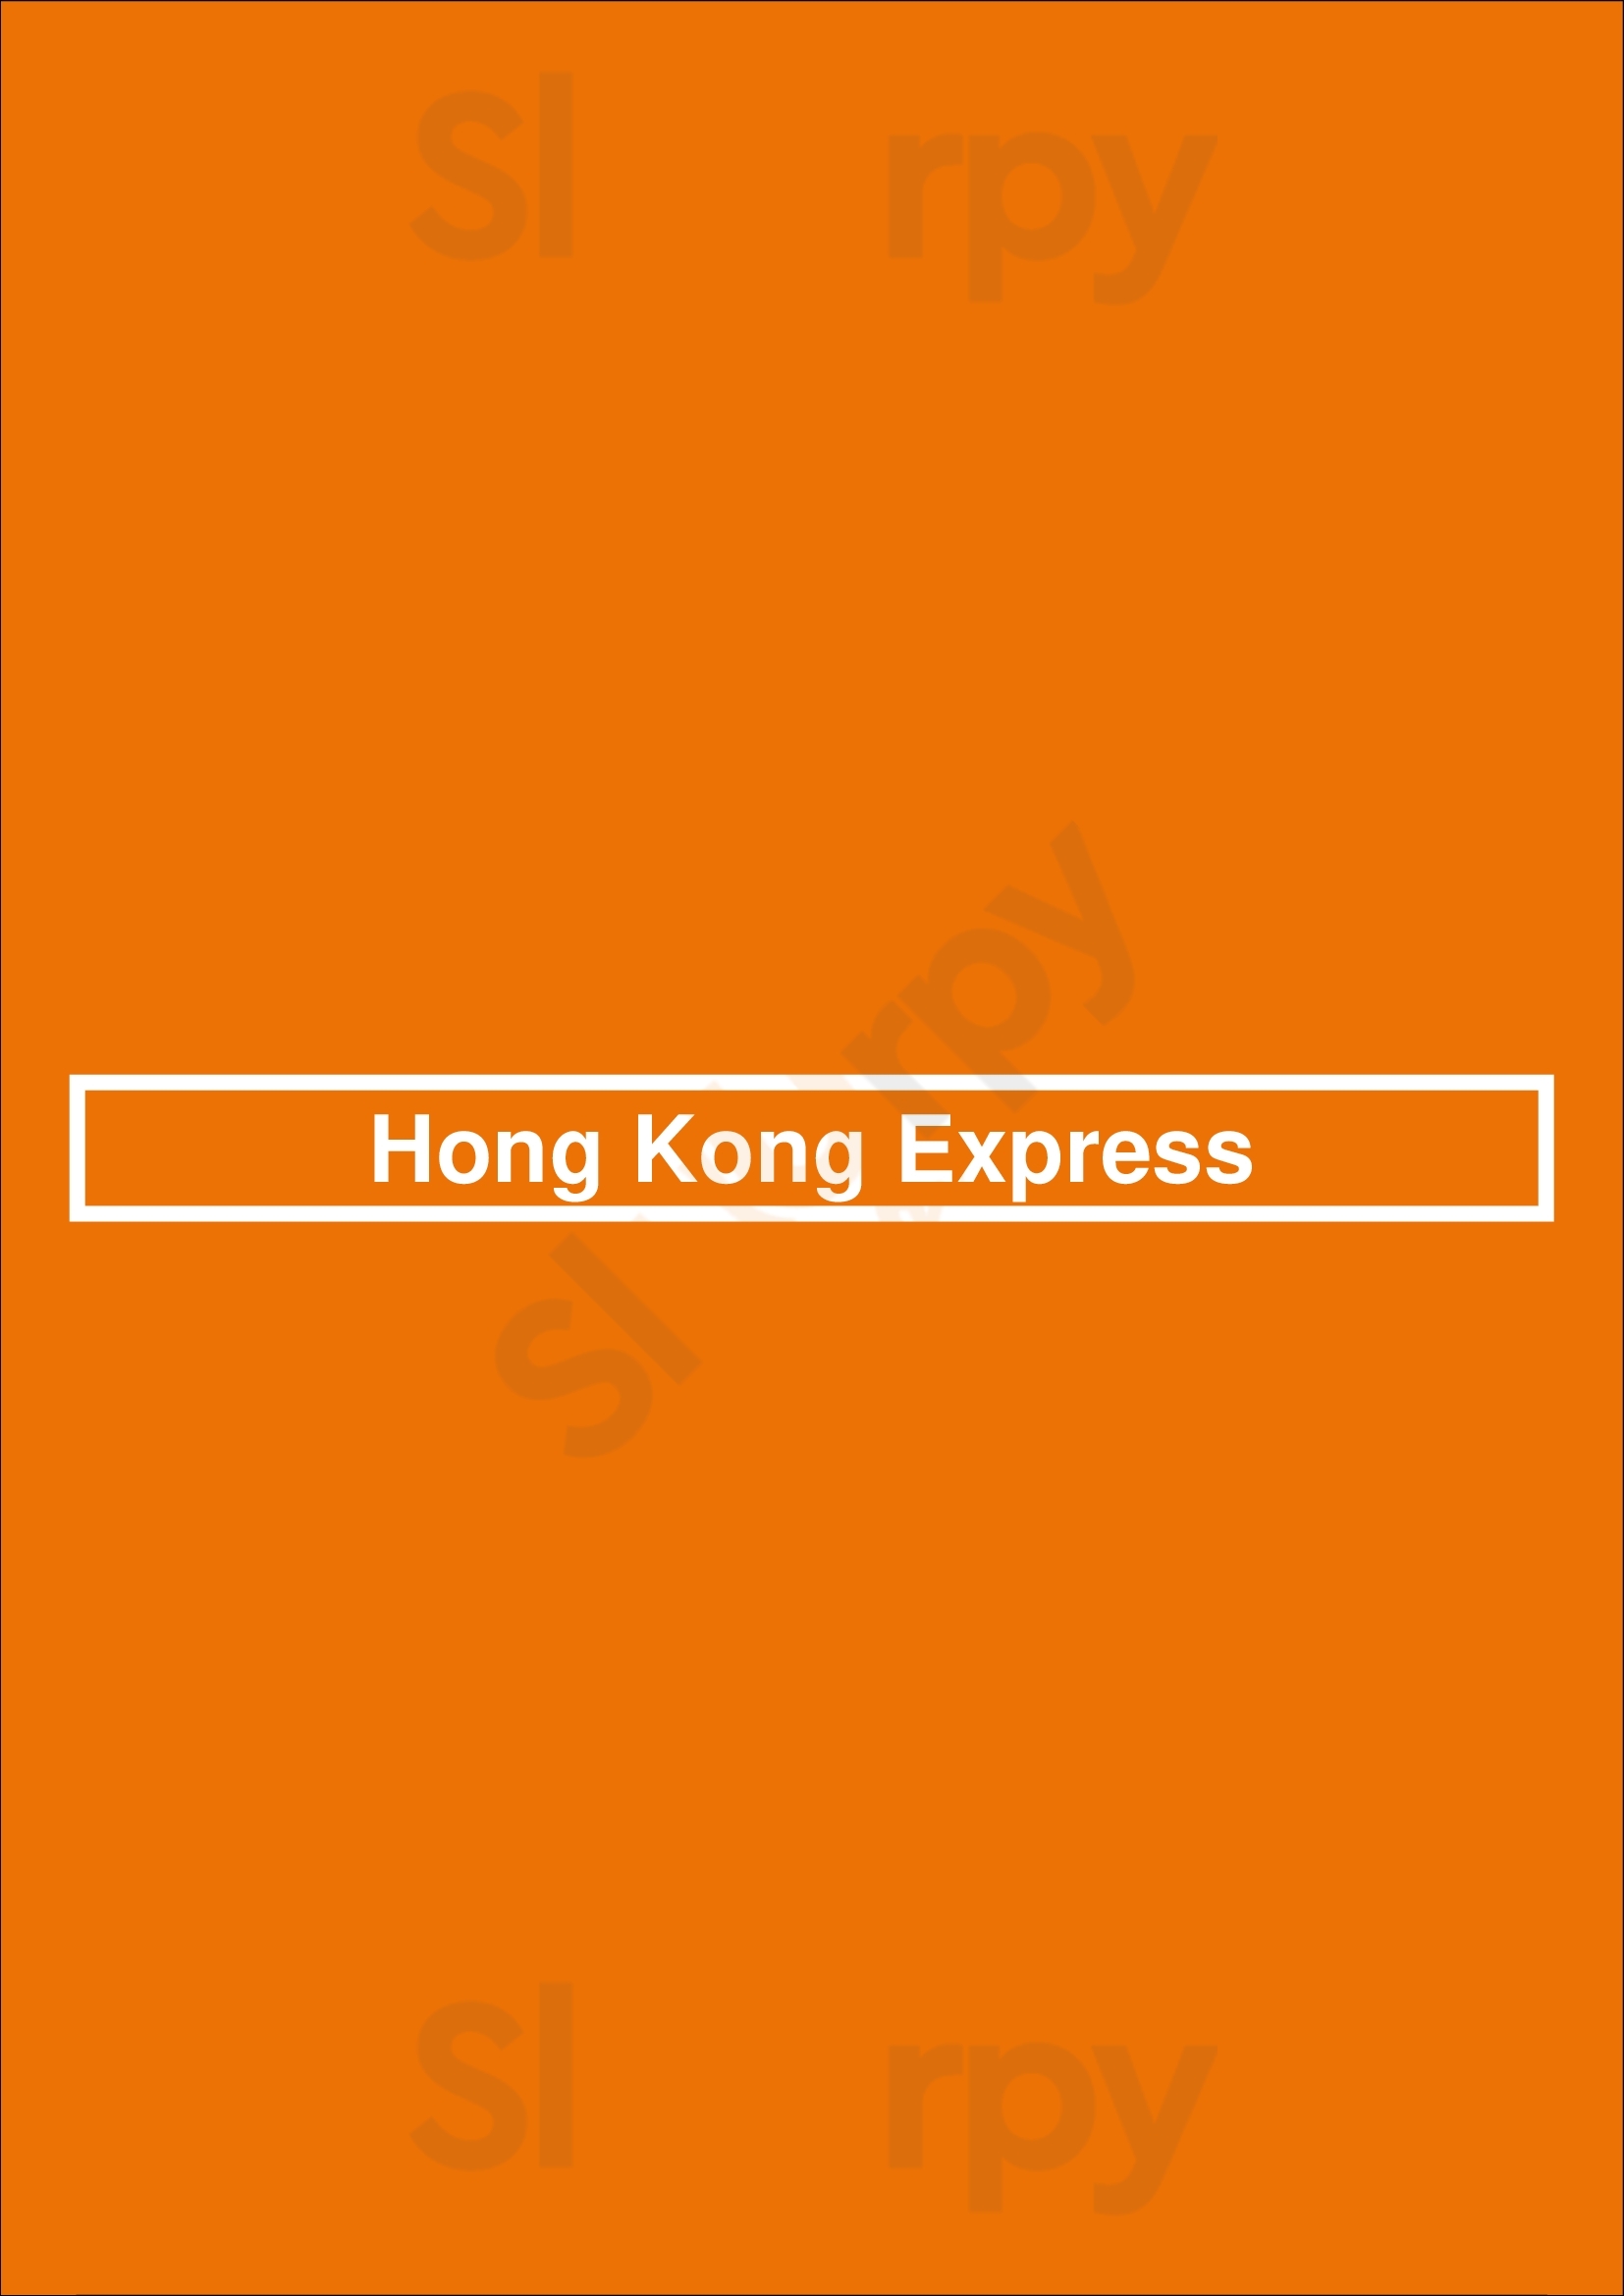 Hong Kong Express Ottawa Menu - 1